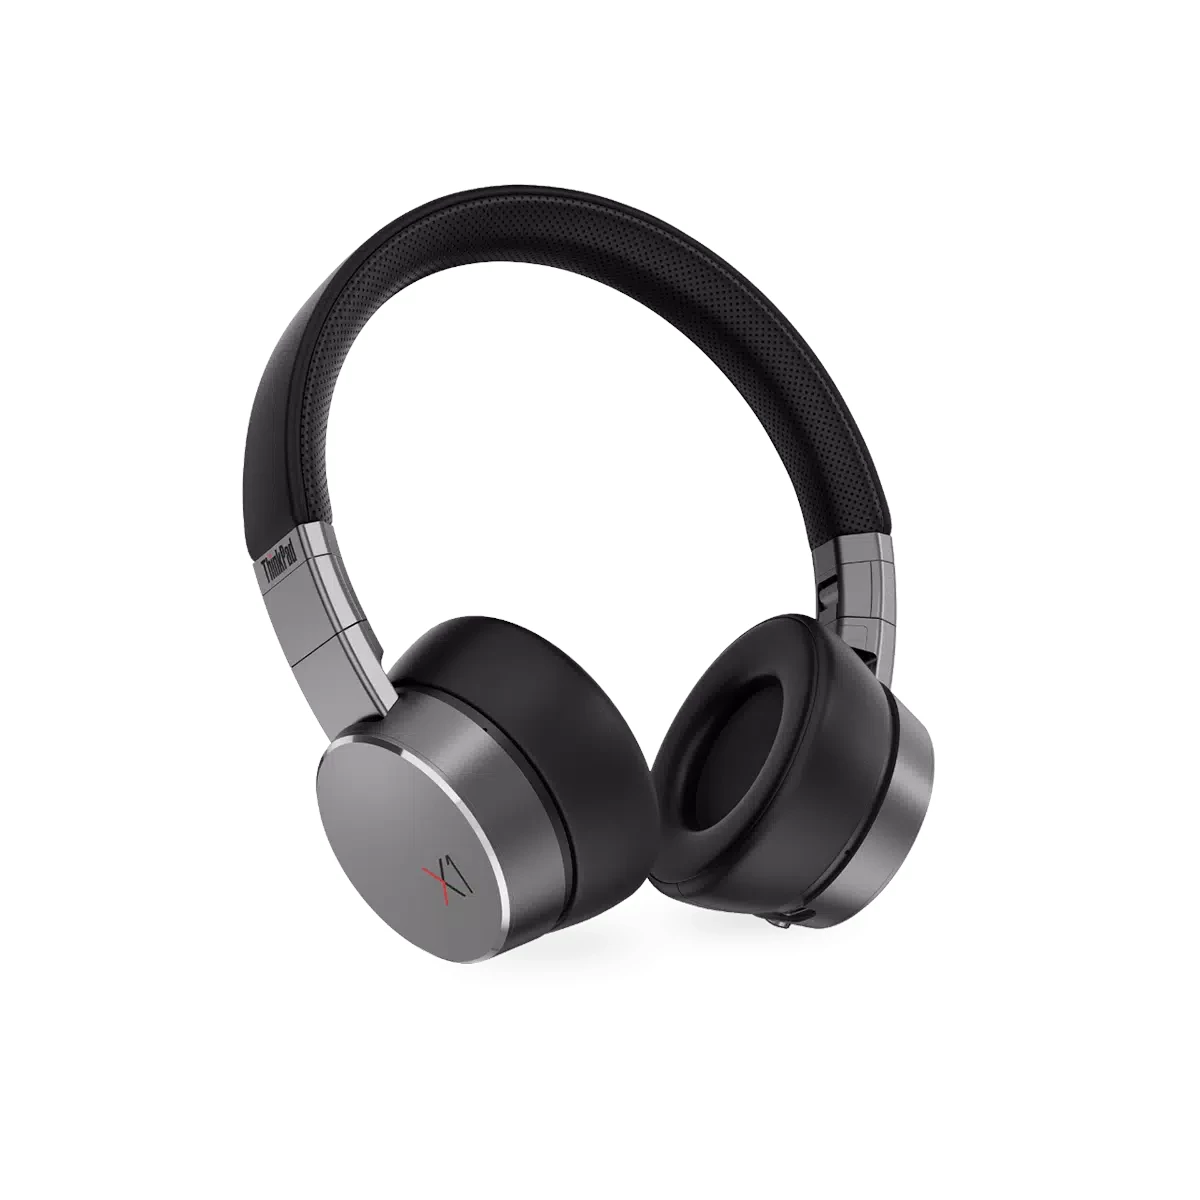 Lenovo ThinkPad X1 Active Noise Cancellation Headphones #4XD0U47635